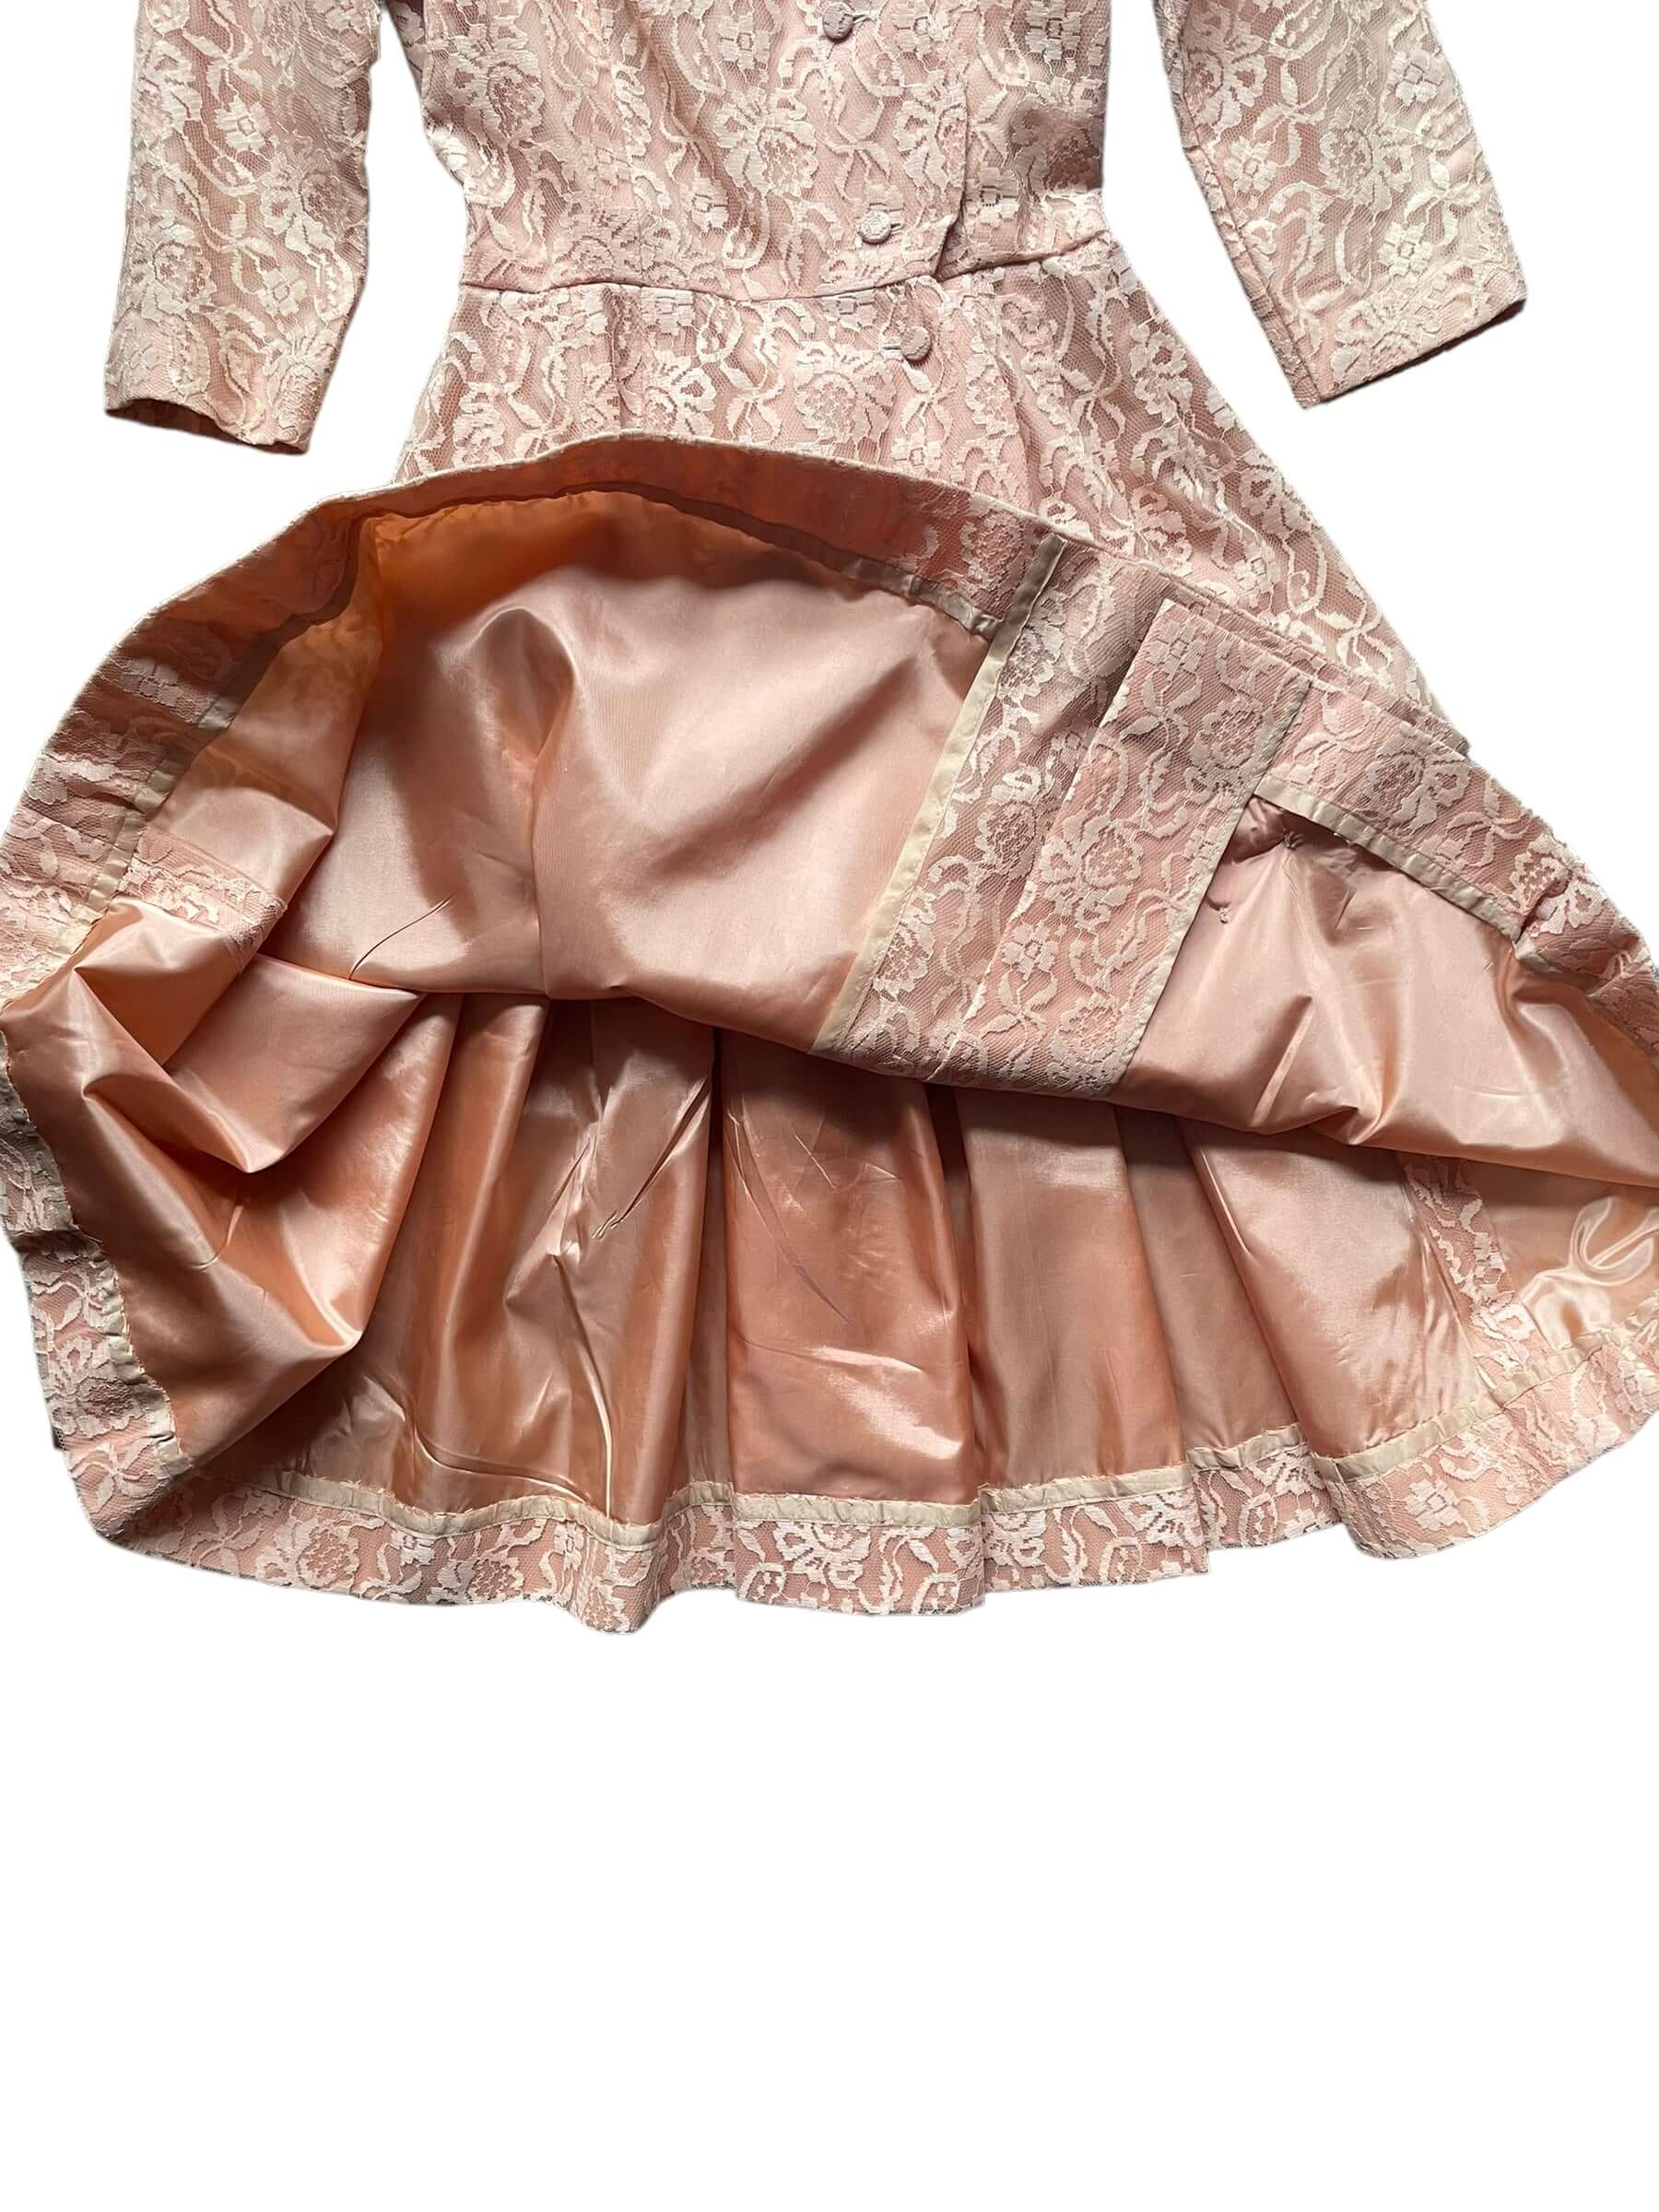 Lining view of Vintage 1950s Handmade Pink Lace Formal Dress |  Barn Owl Vintage Dresses | Seattle Vintage Ladies Clothing